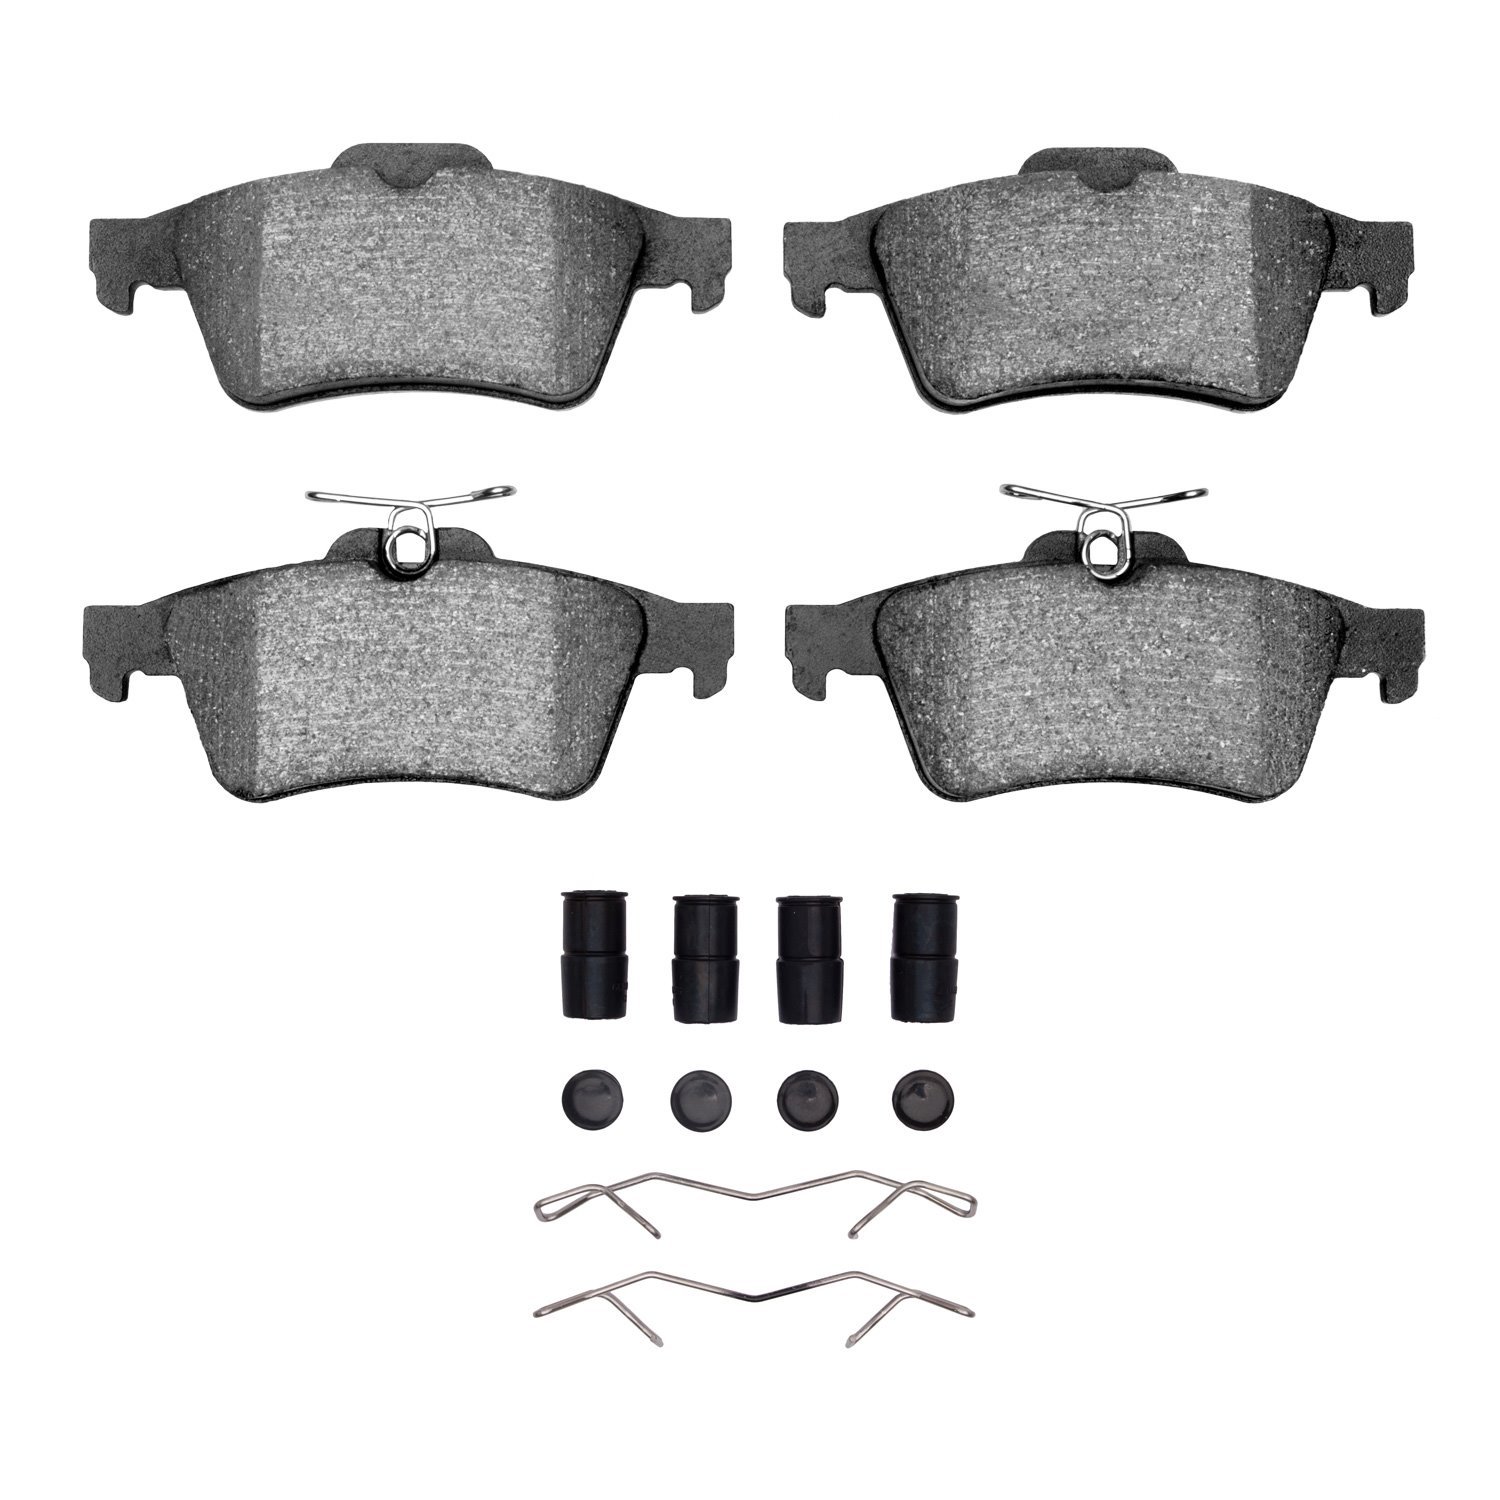 1310-1095-01 3000-Series Ceramic Brake Pads & Hardware Kit, Fits Select Multiple Makes/Models, Position: Rear